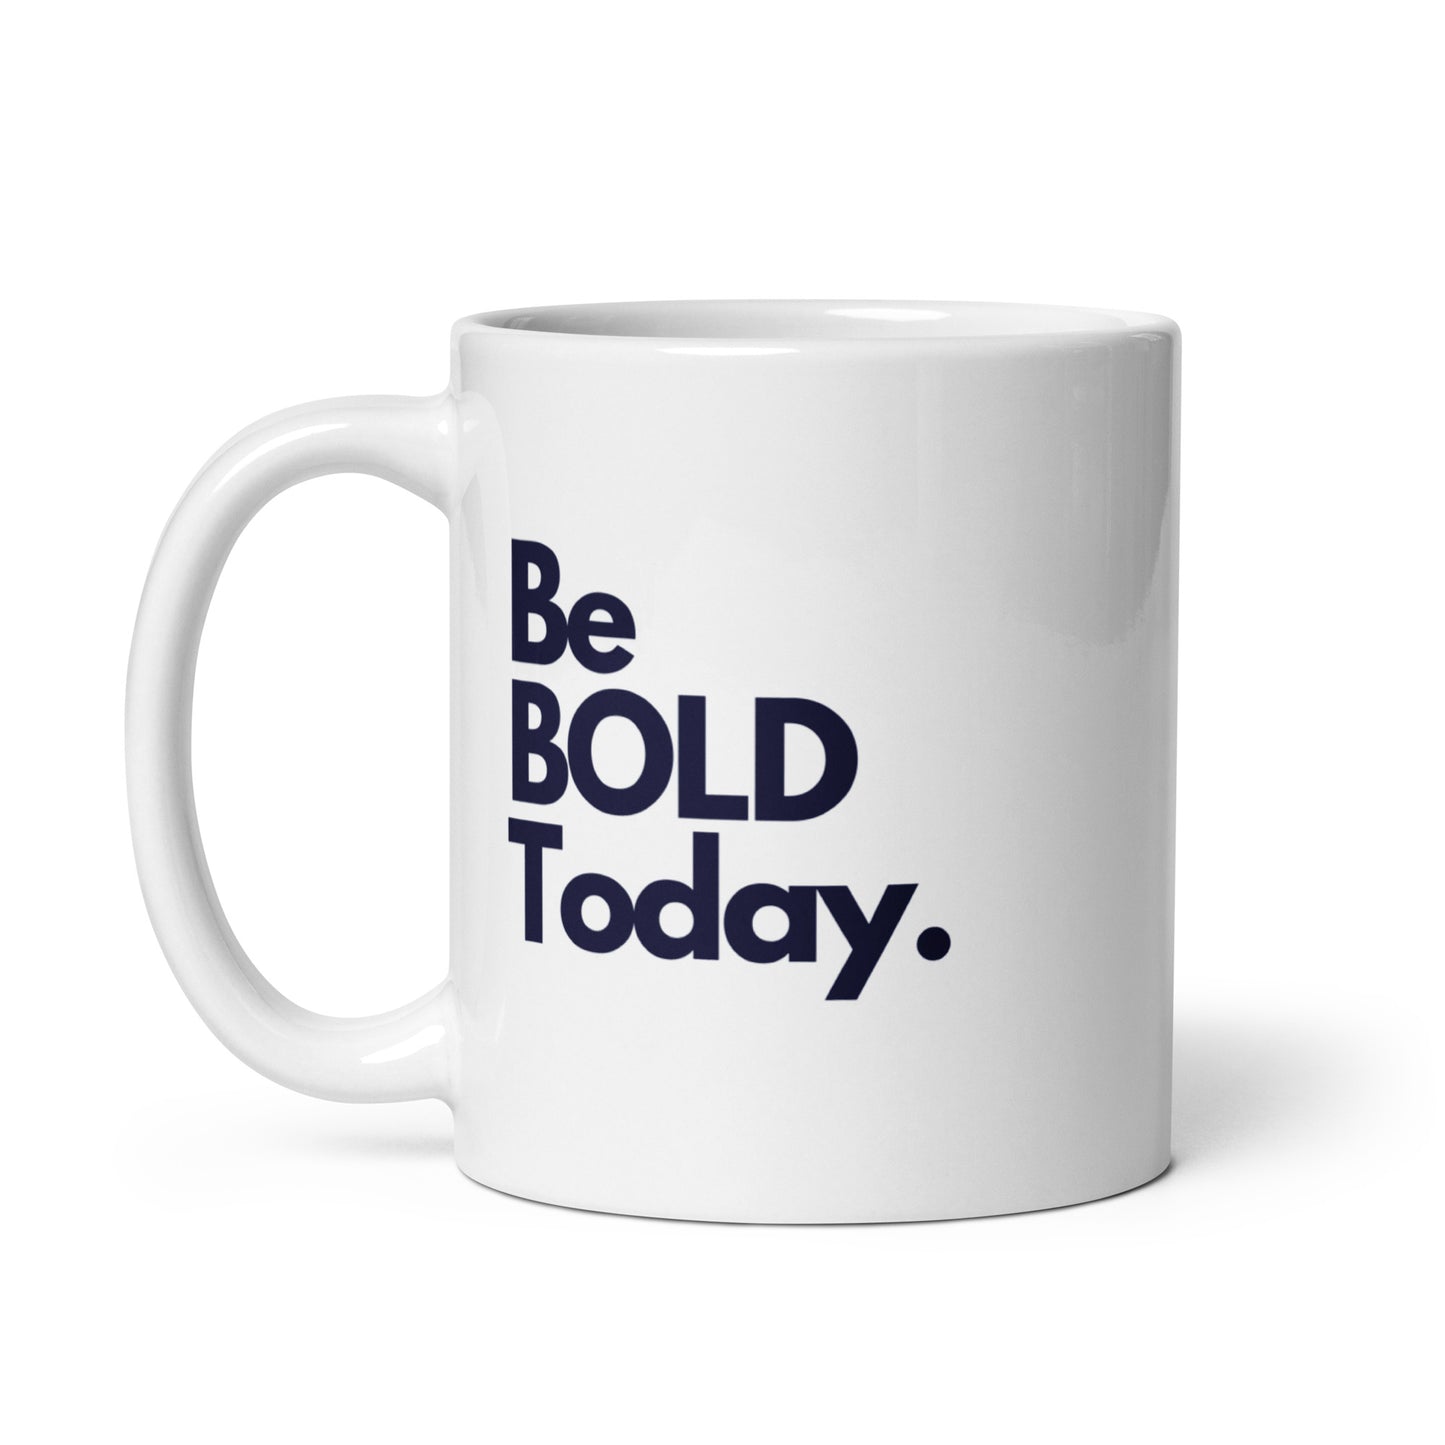 Be BOLD Today White Glossy Mug